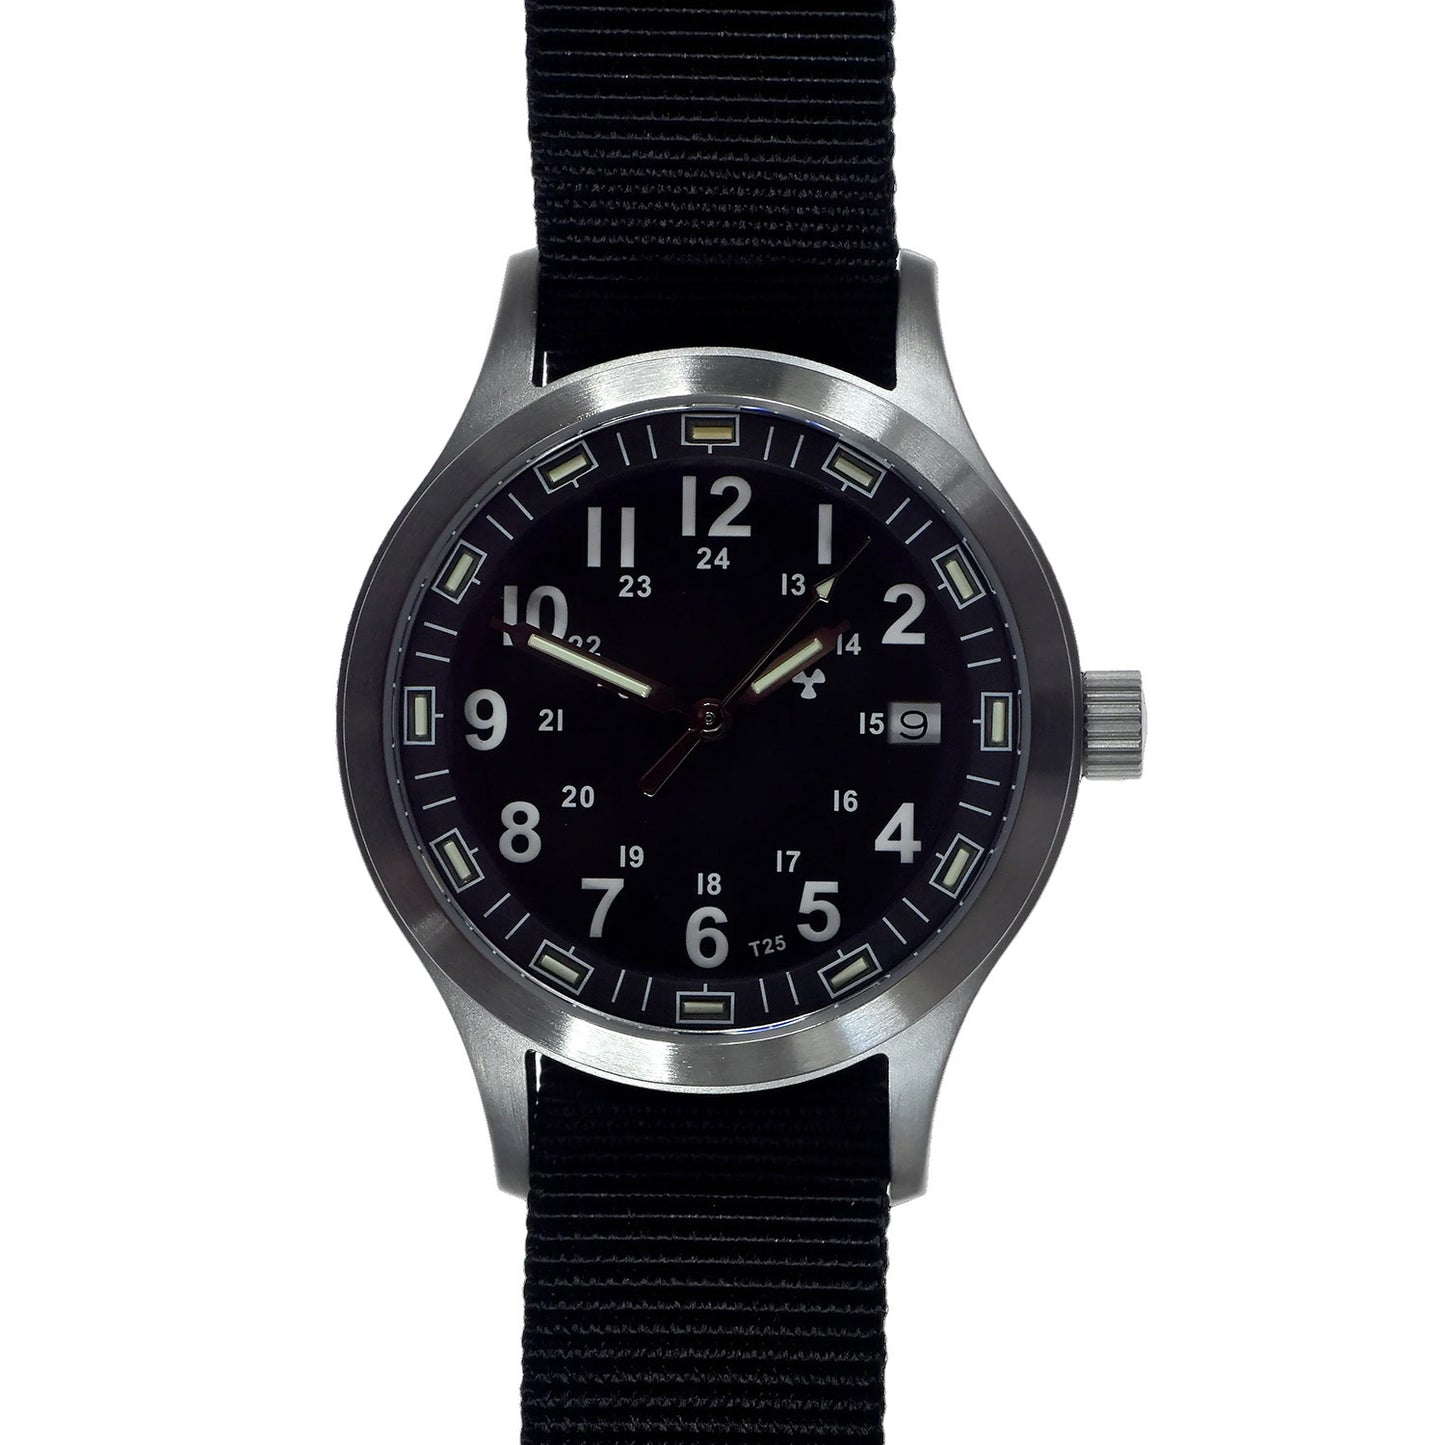 MKIII 1950s/60s pattern Tritium Field Watch